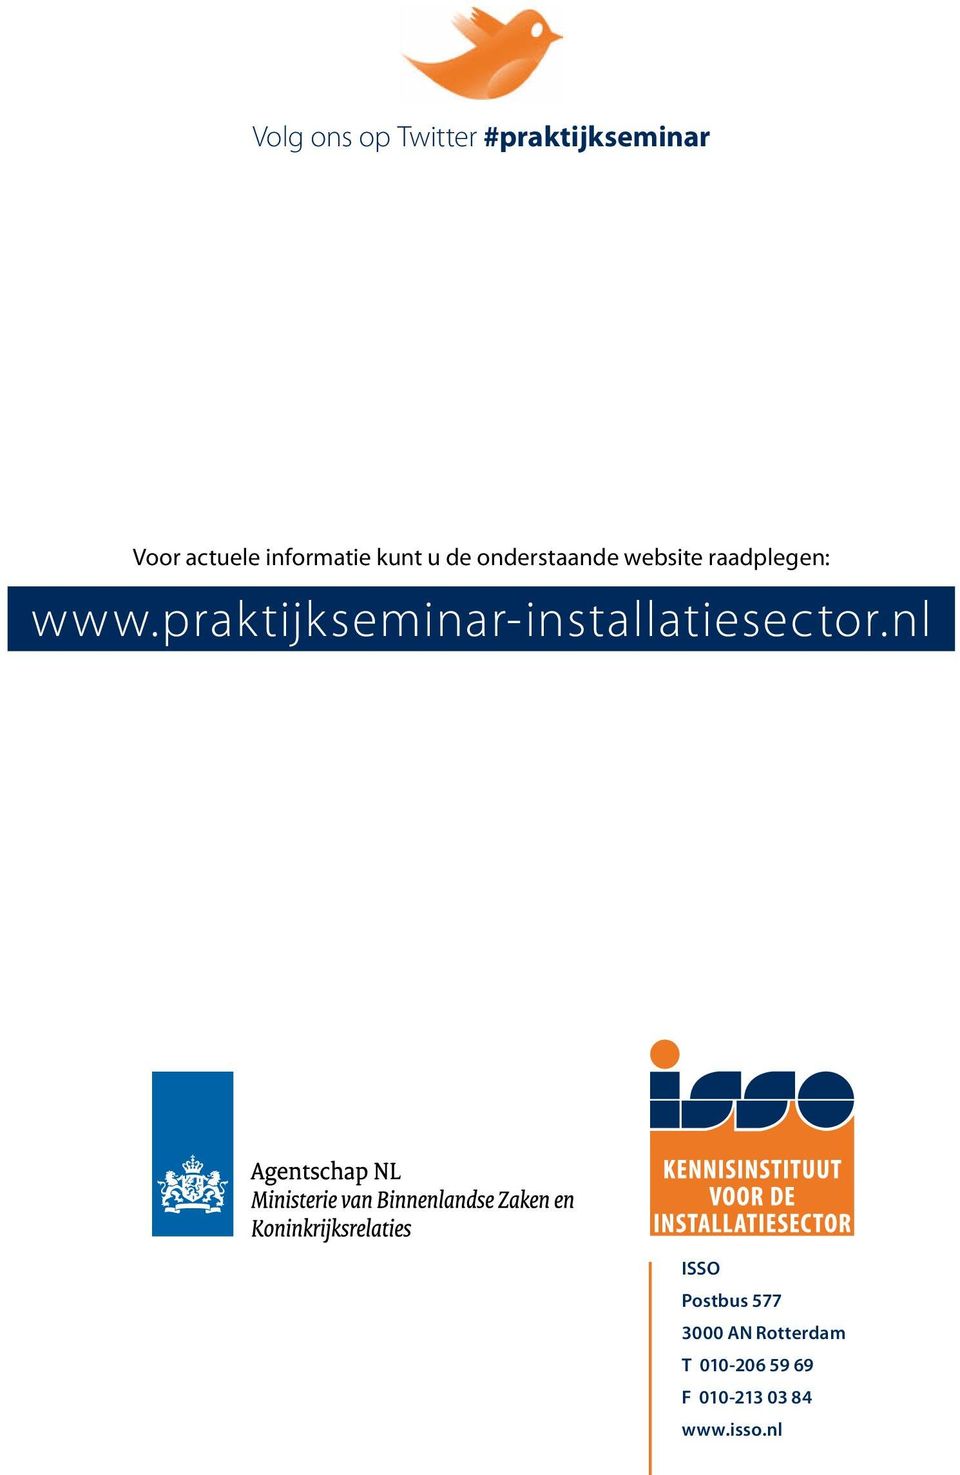 www.praktijkseminar-installatiesector.